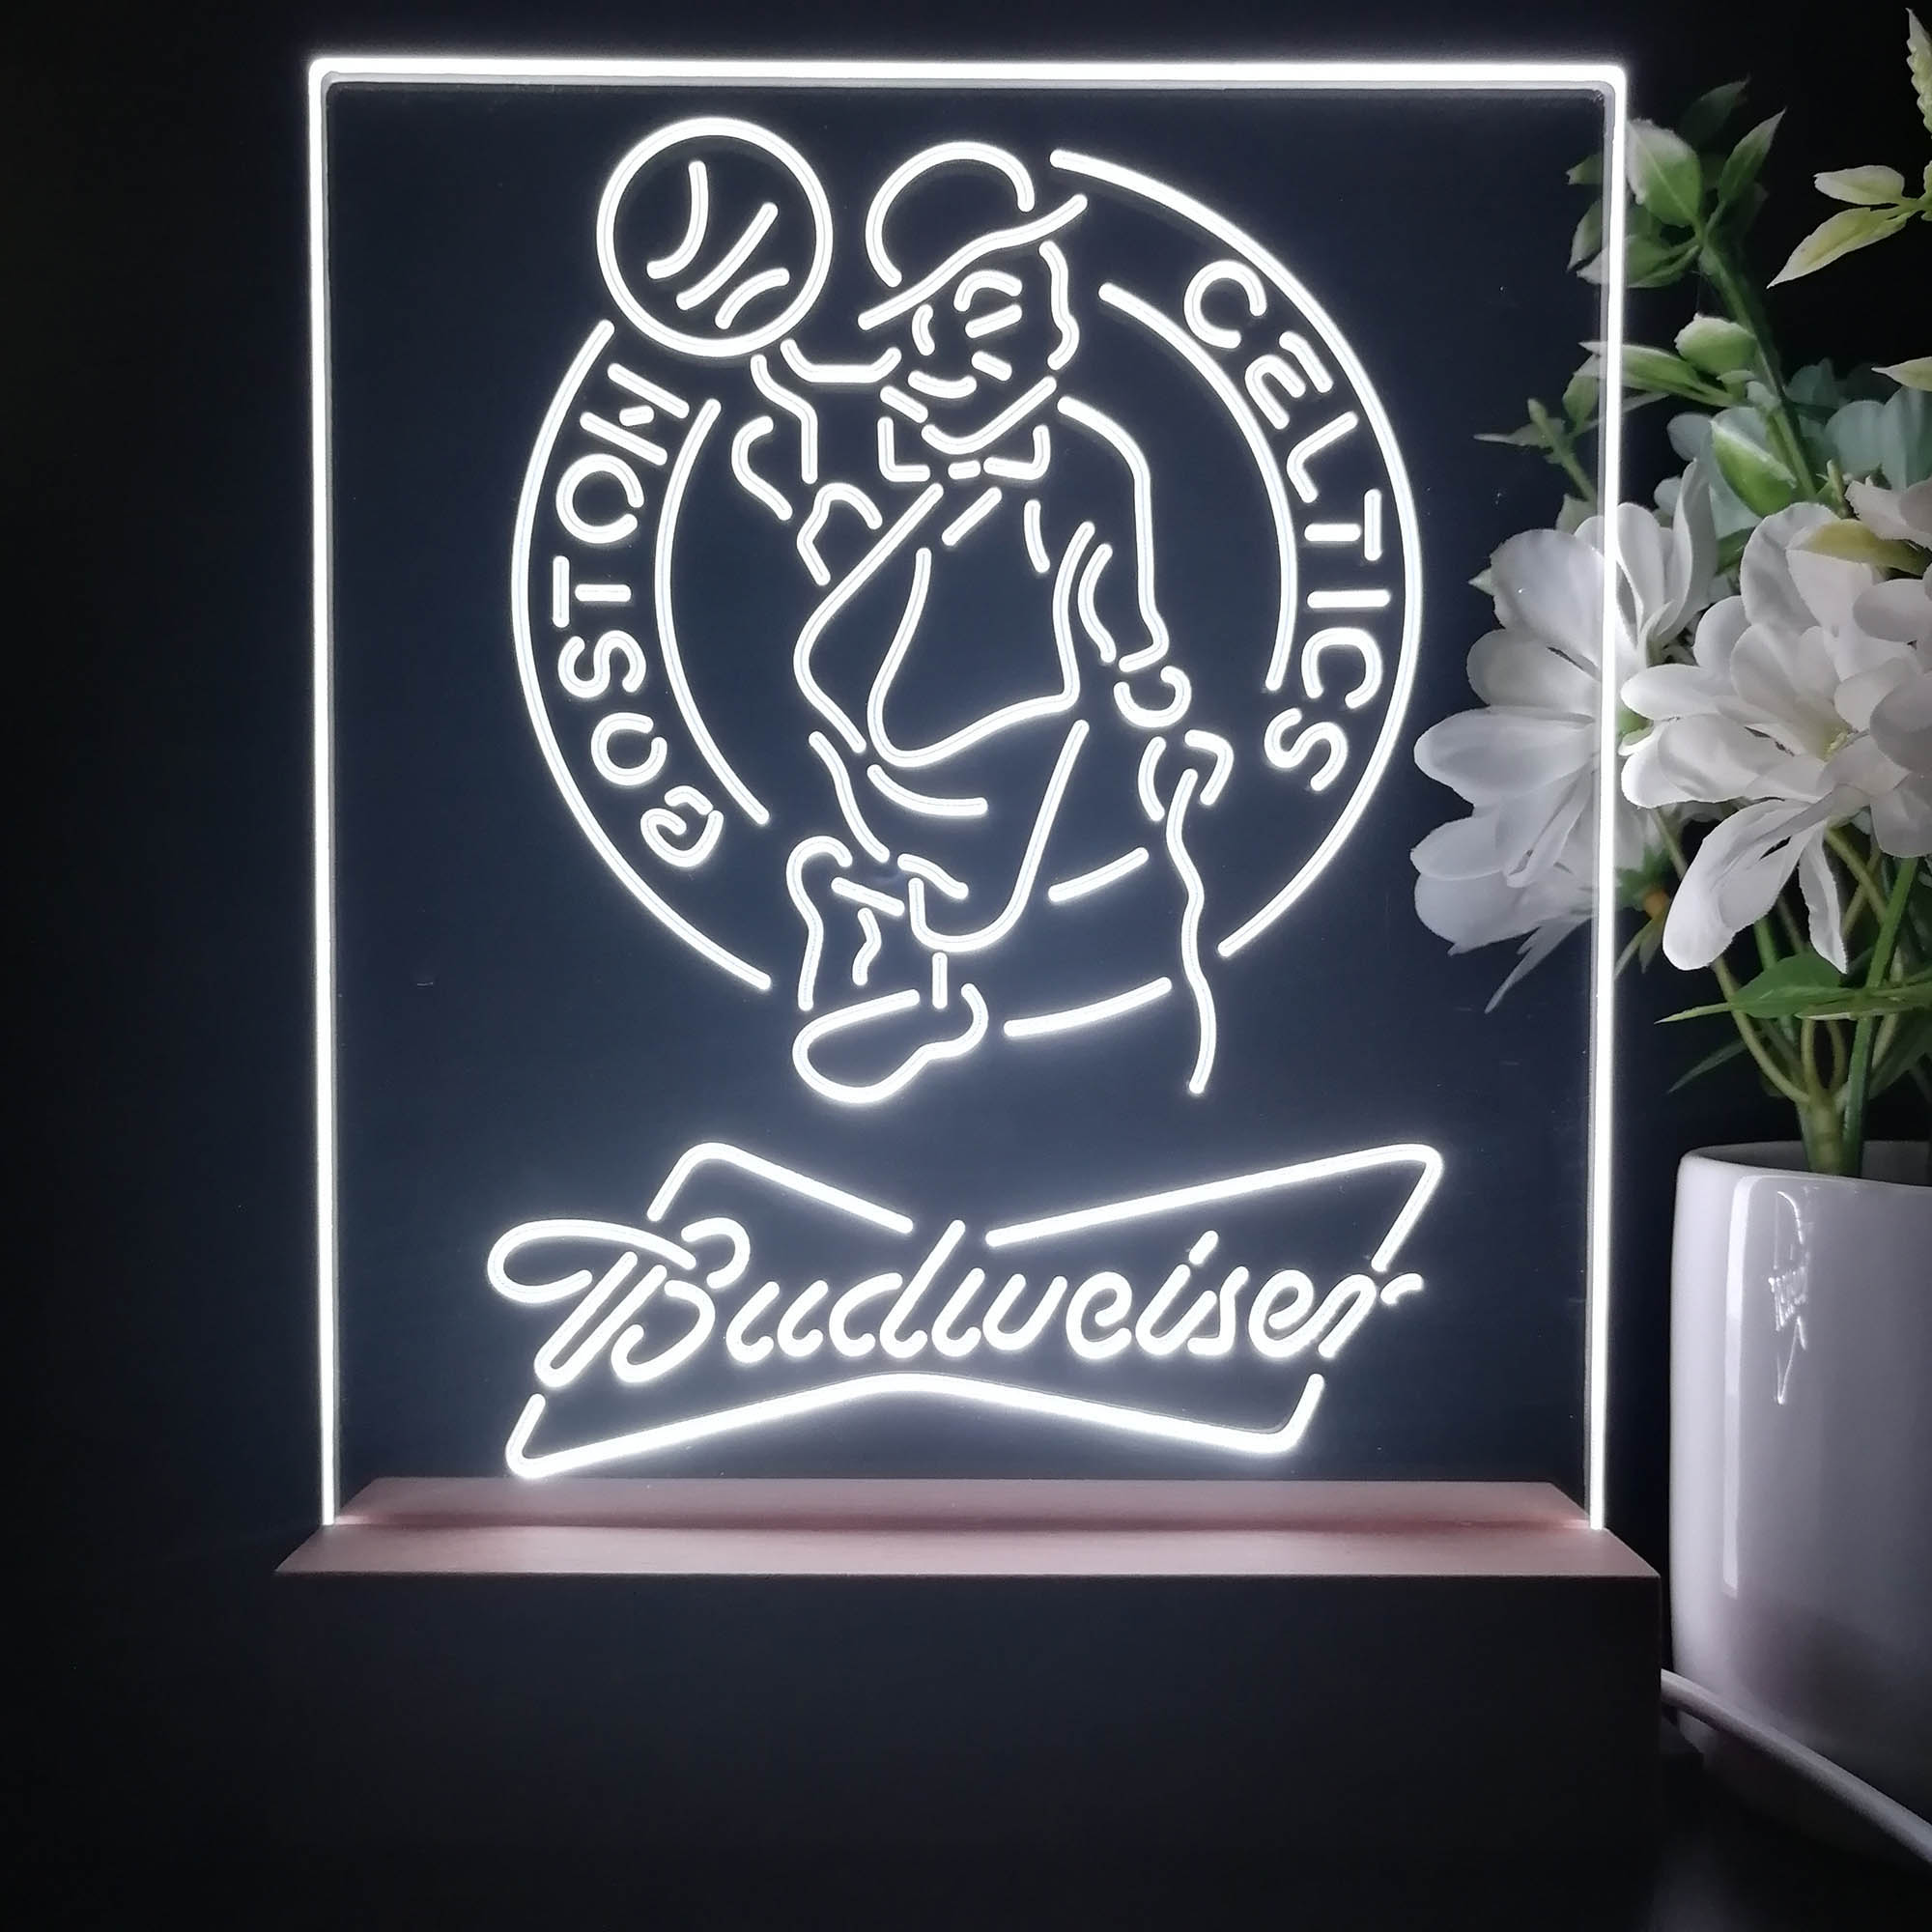 Boston Celtics Budweiser Neon Sign Pub Bar Lamp